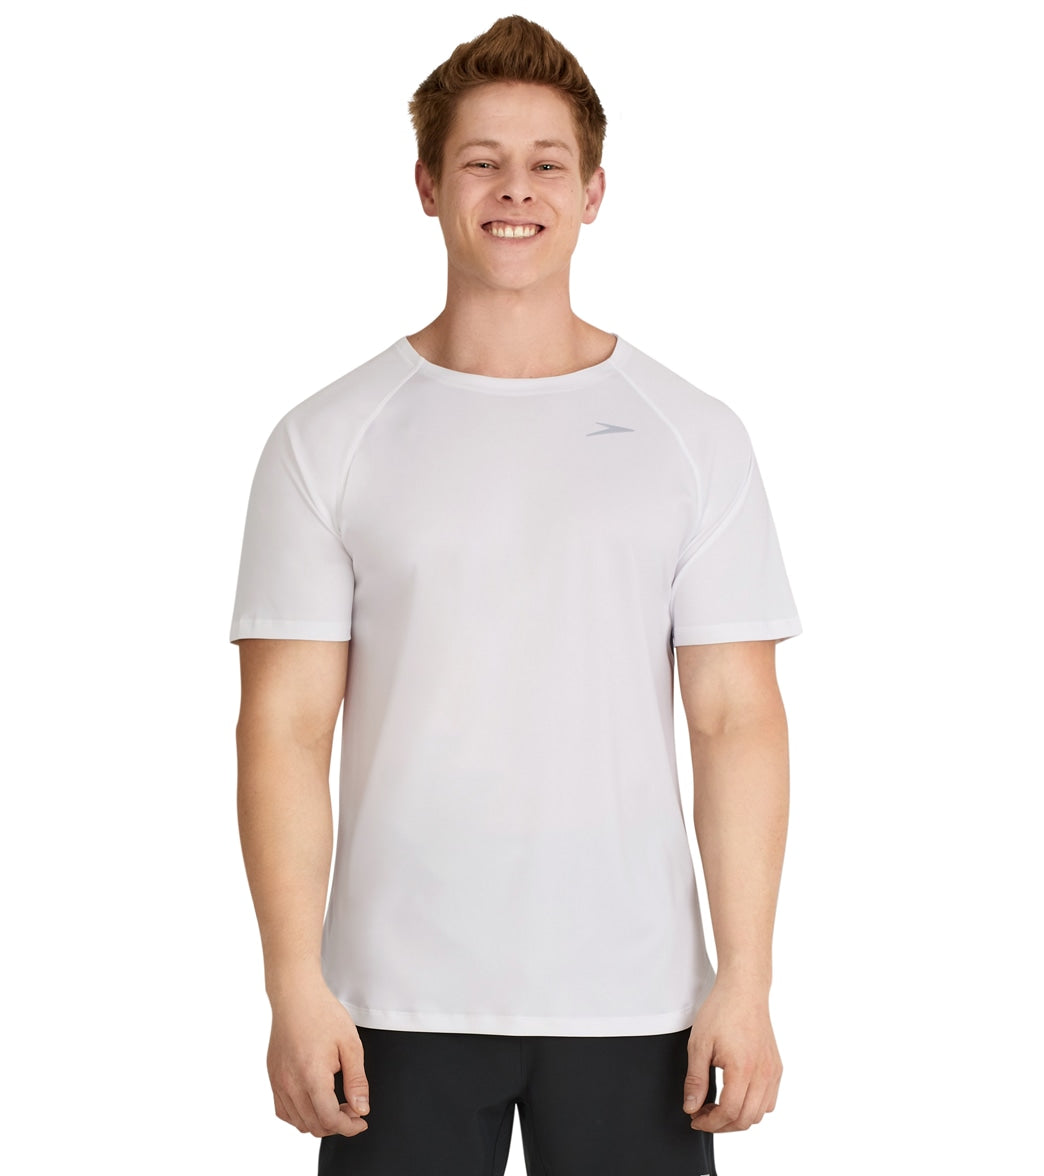 Speedo Mens Short Sleeve Training Shirt